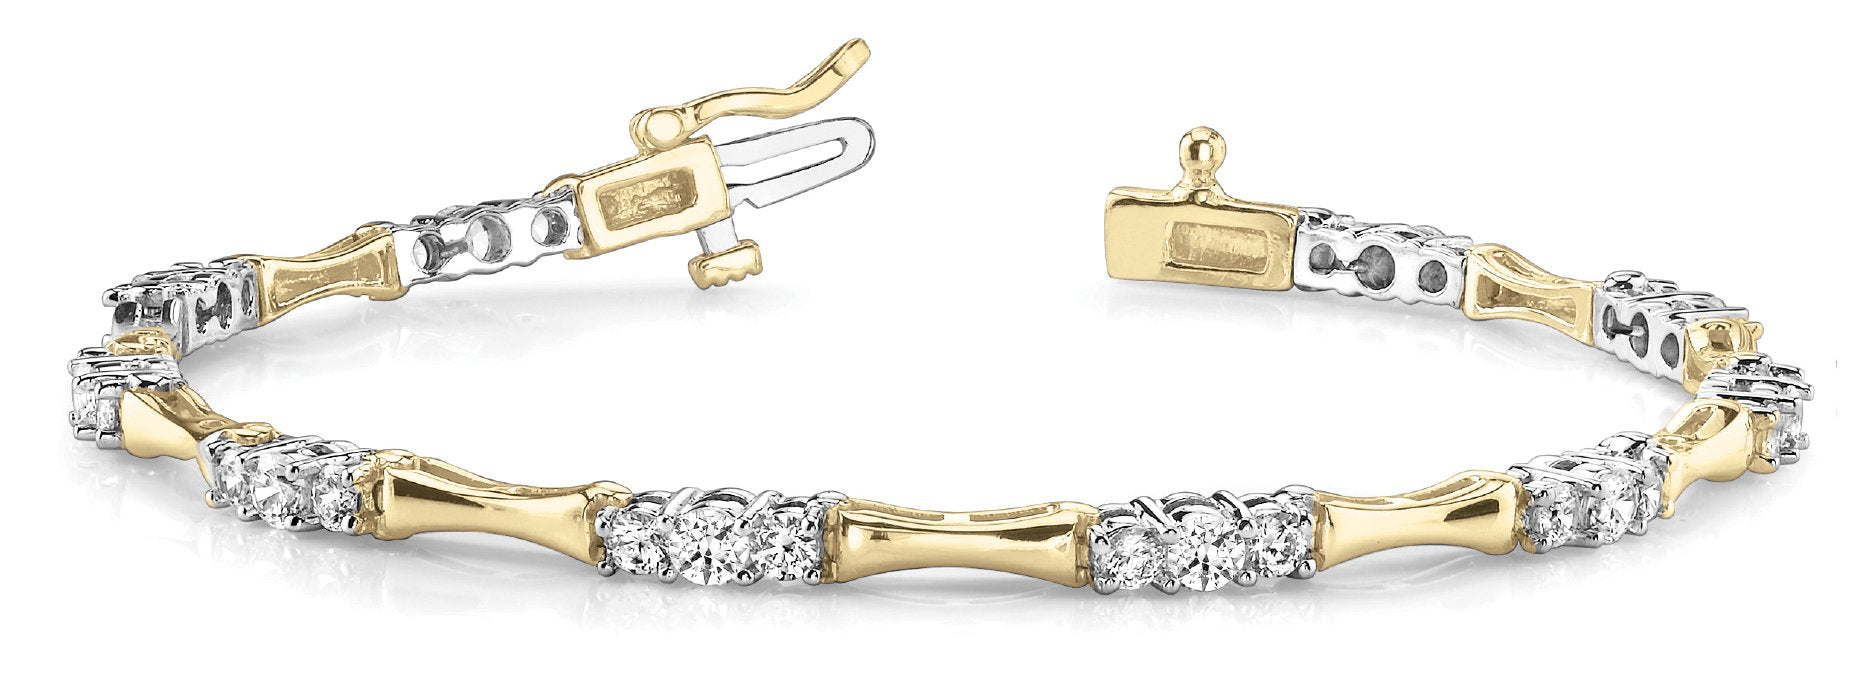 Fancy Diamond Bracelet Ladies 2.13ct tw - 14kt Yellow Gold